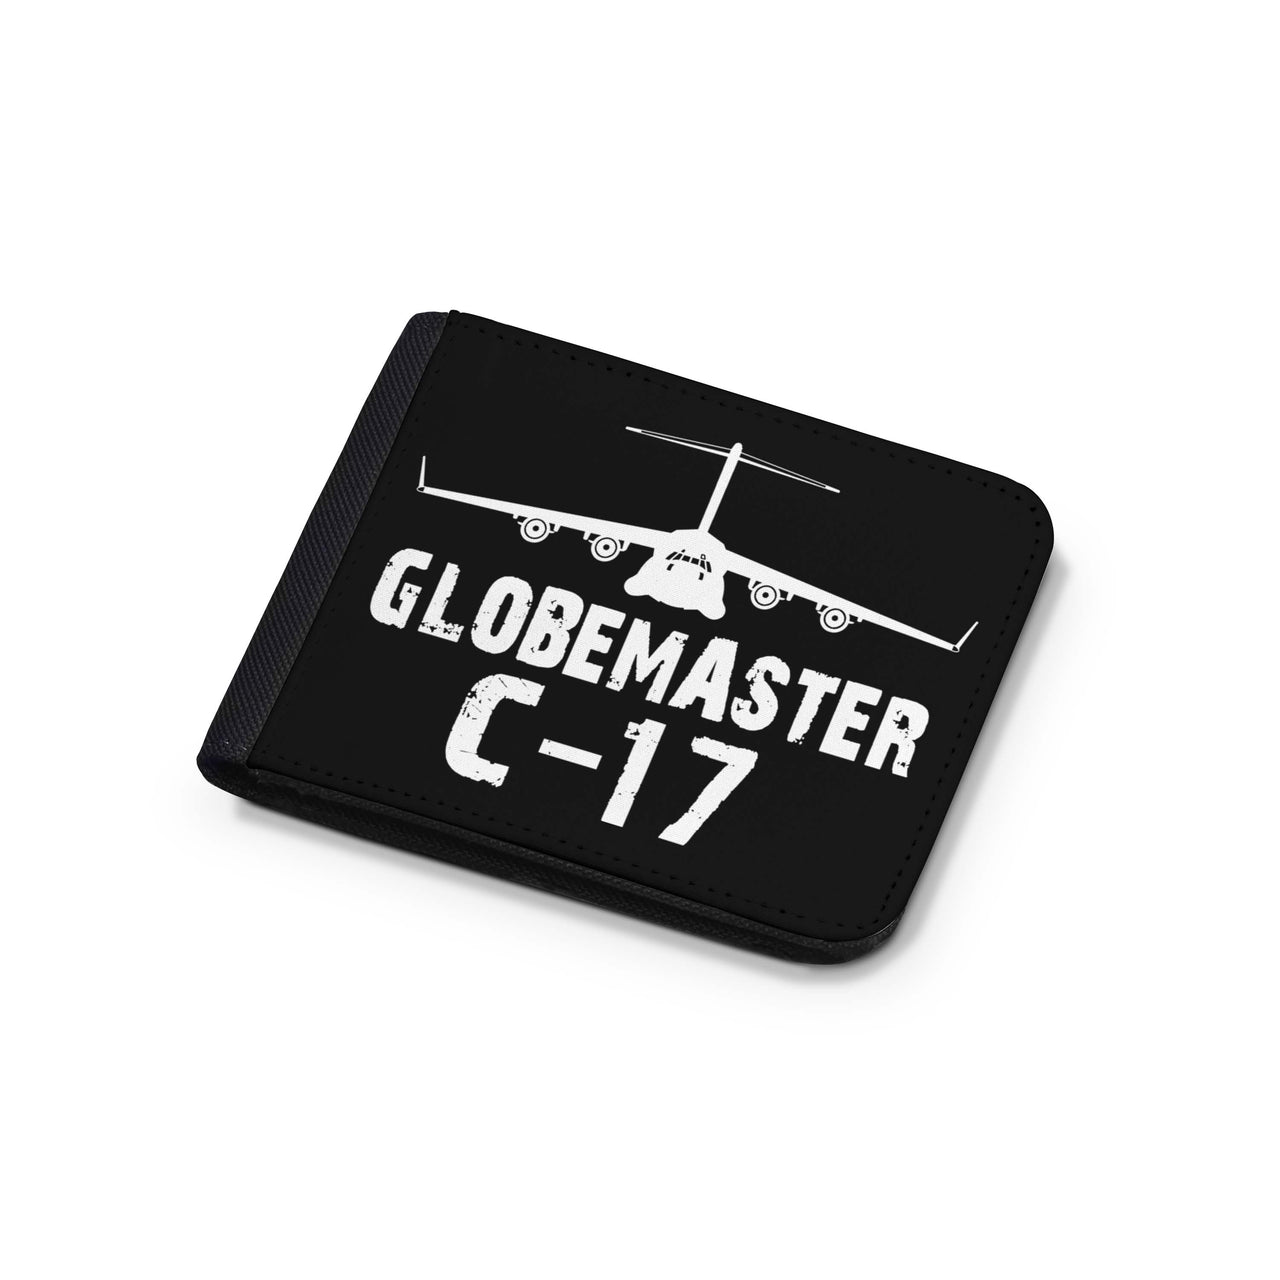 GlobeMaster C-17 & Plane Designed Wallets